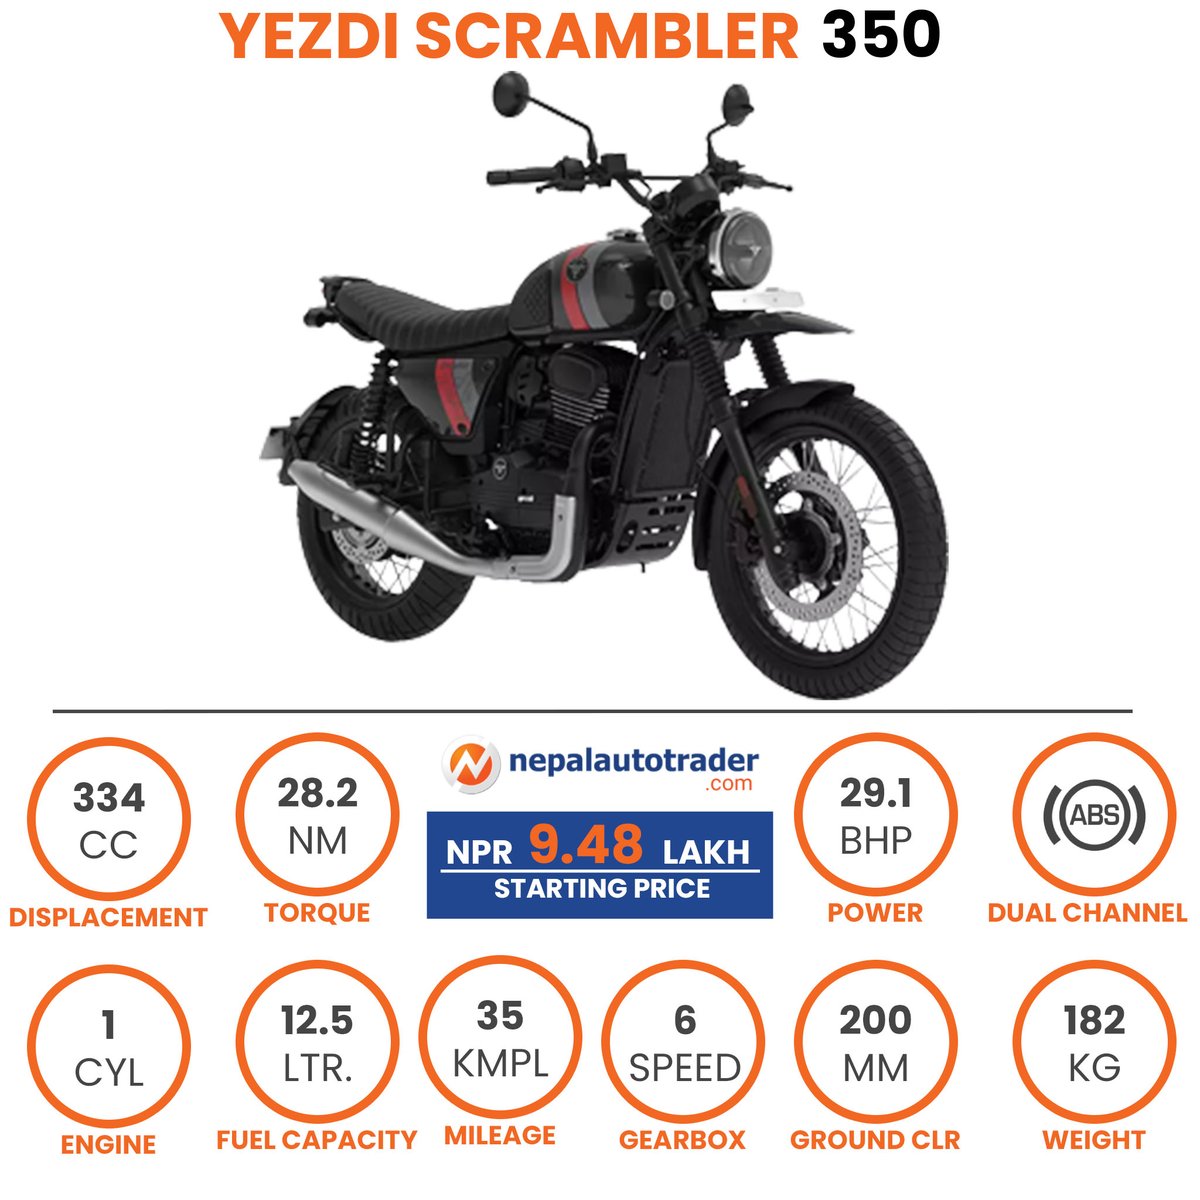 Yezdi Scrambler Quick Specifications. #Autonews #AutonewsNepal #Bikes #BikesNepal #YezdiBikes #YezdiNepal #YezdiScrambler #YezdiScrambler350 #Nepalautotrader